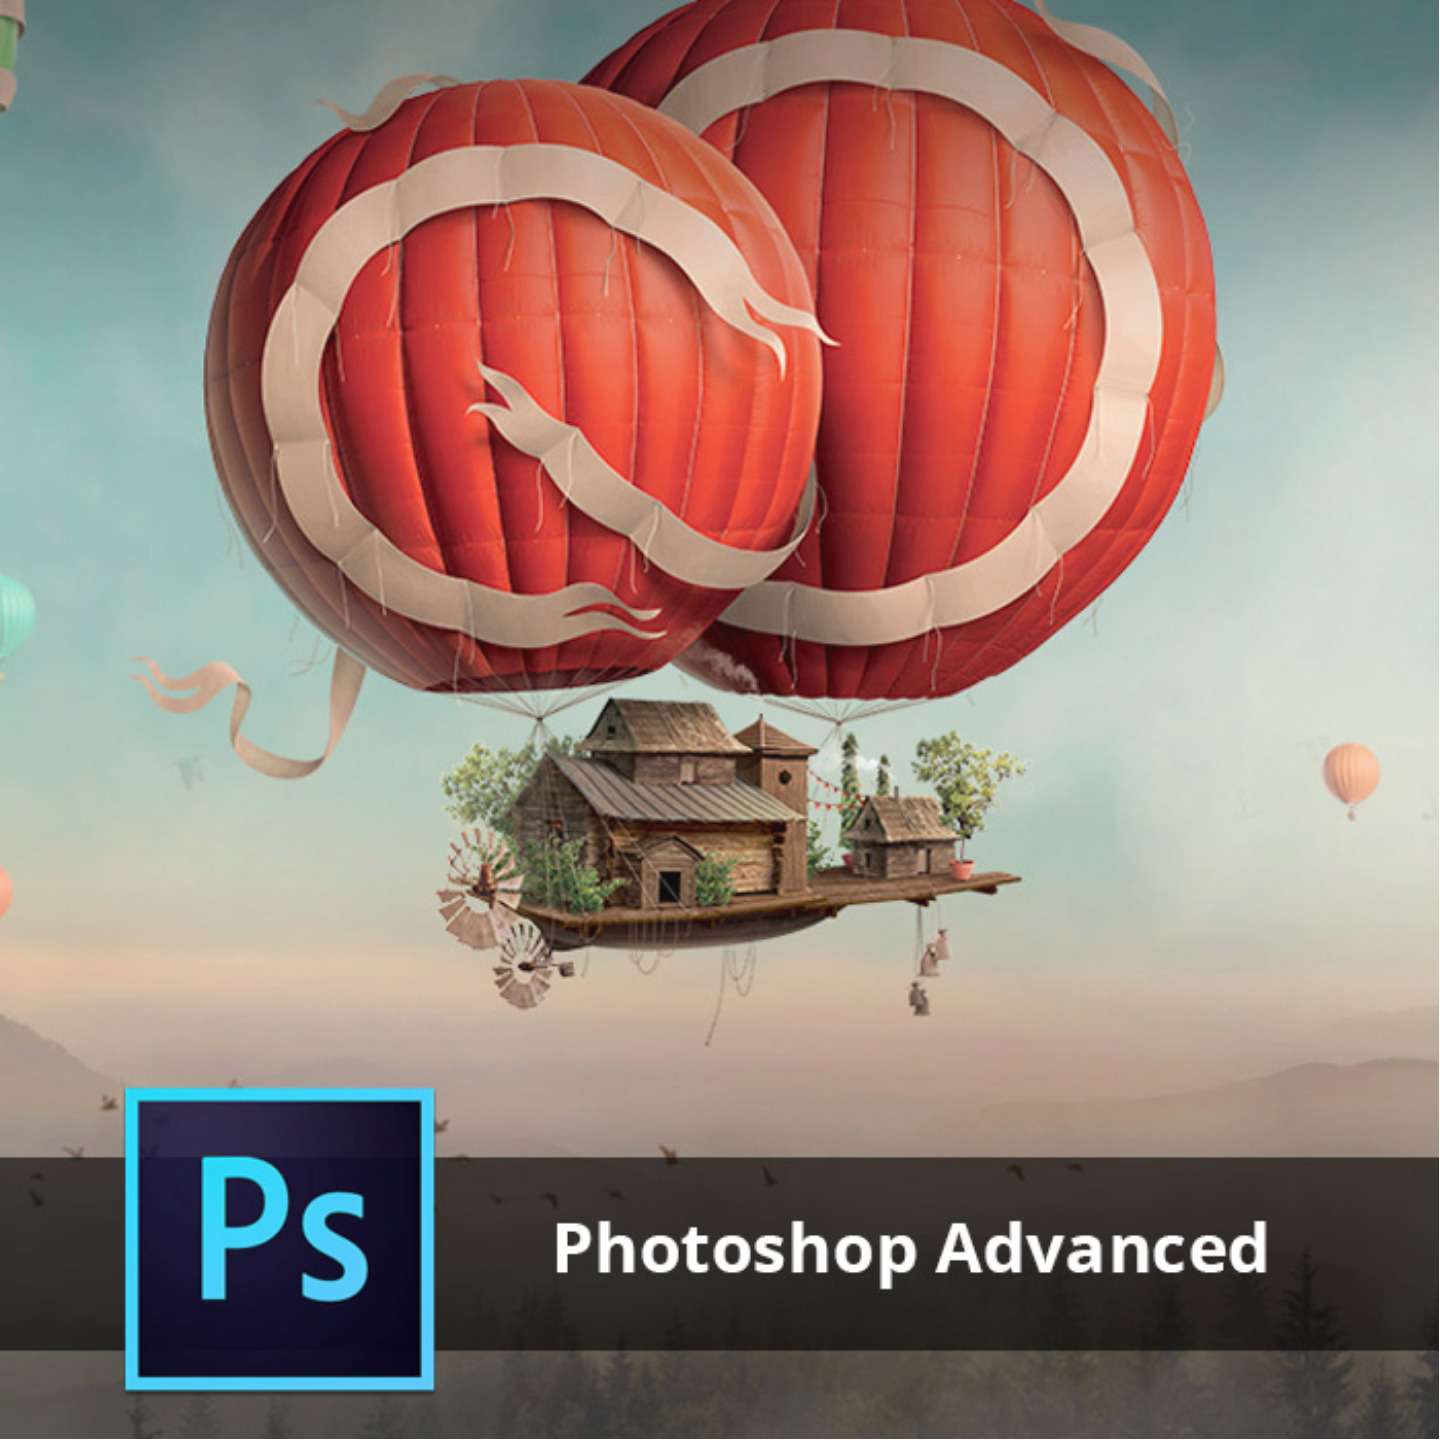 Adobe Training - Photoshop Advanced